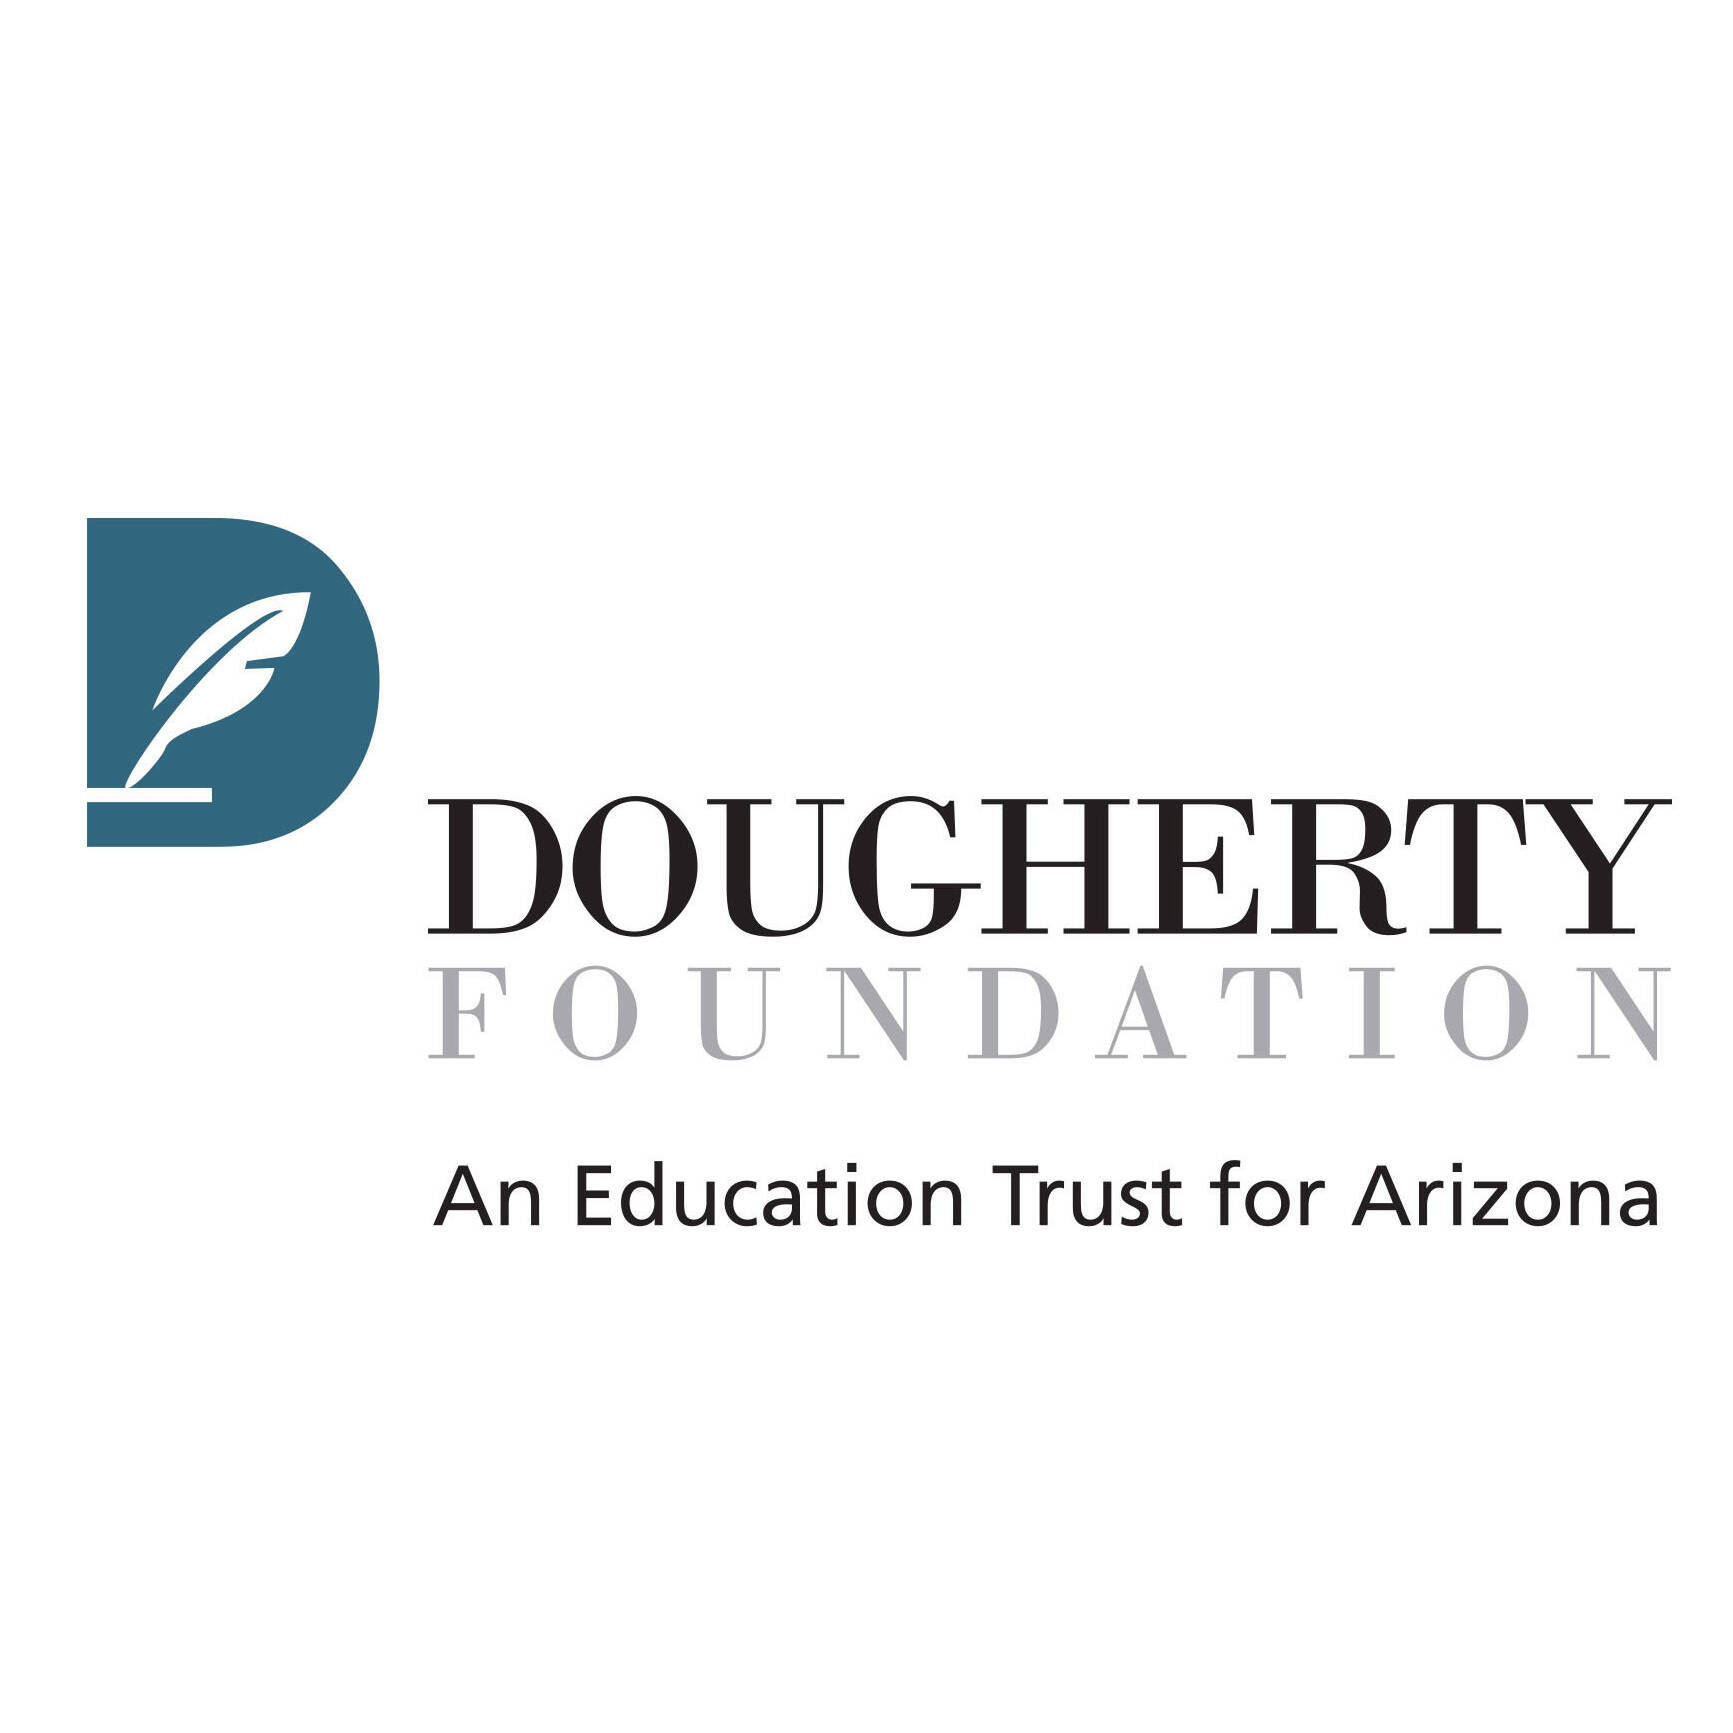 Dougherty Foundation